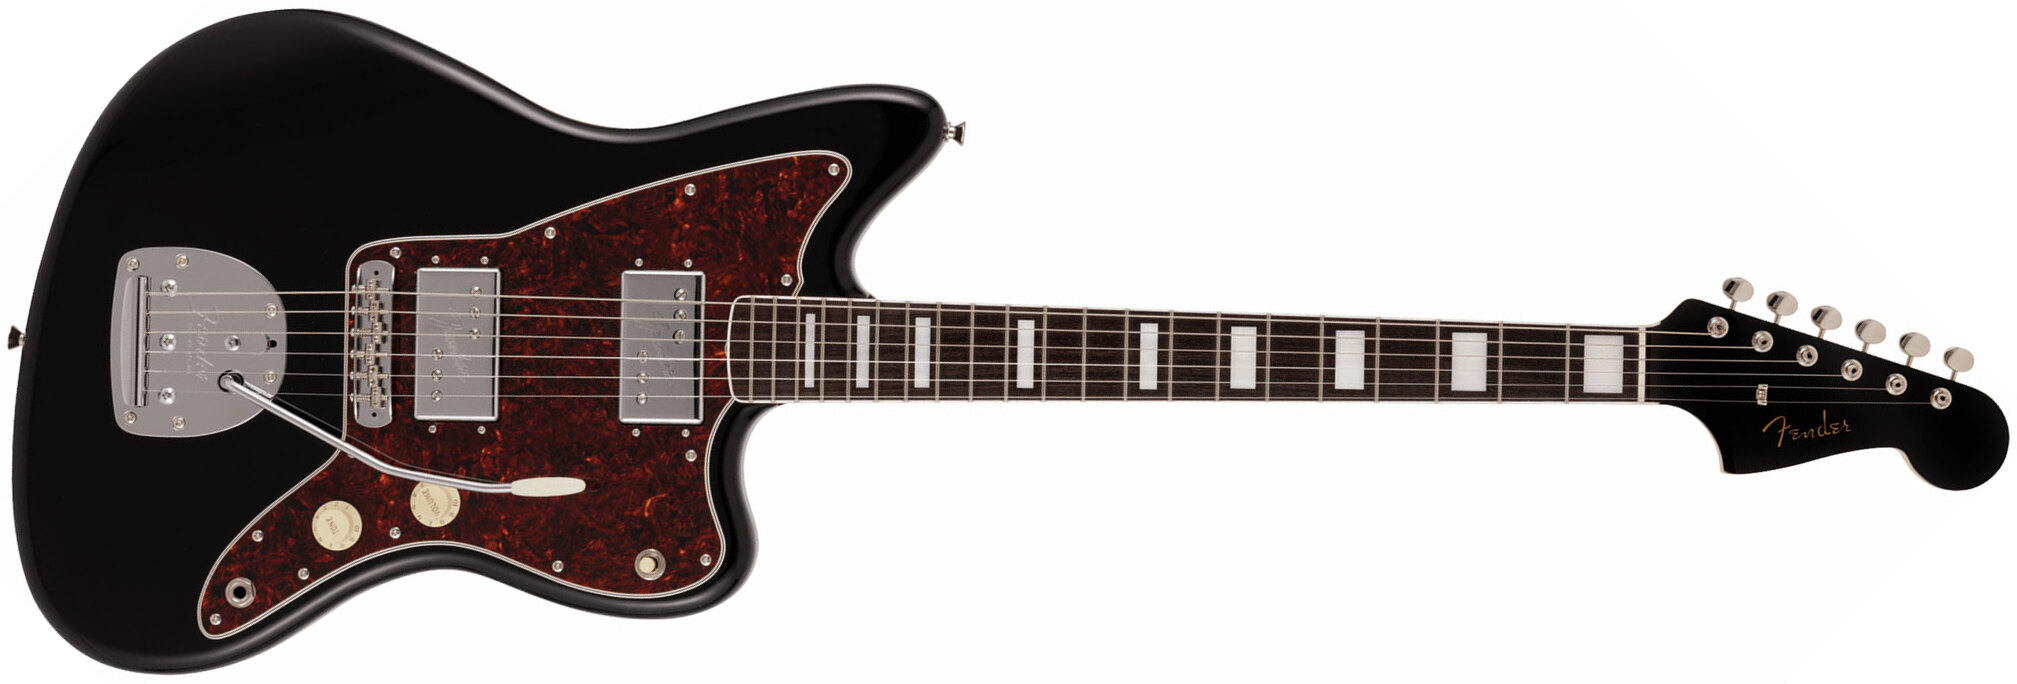 Fender Jazzmaster 60s Hh Wide Range Cunife Mij Traditional Jap 2h Trem Rw - Black - Double Cut E-Gitarre - Main picture